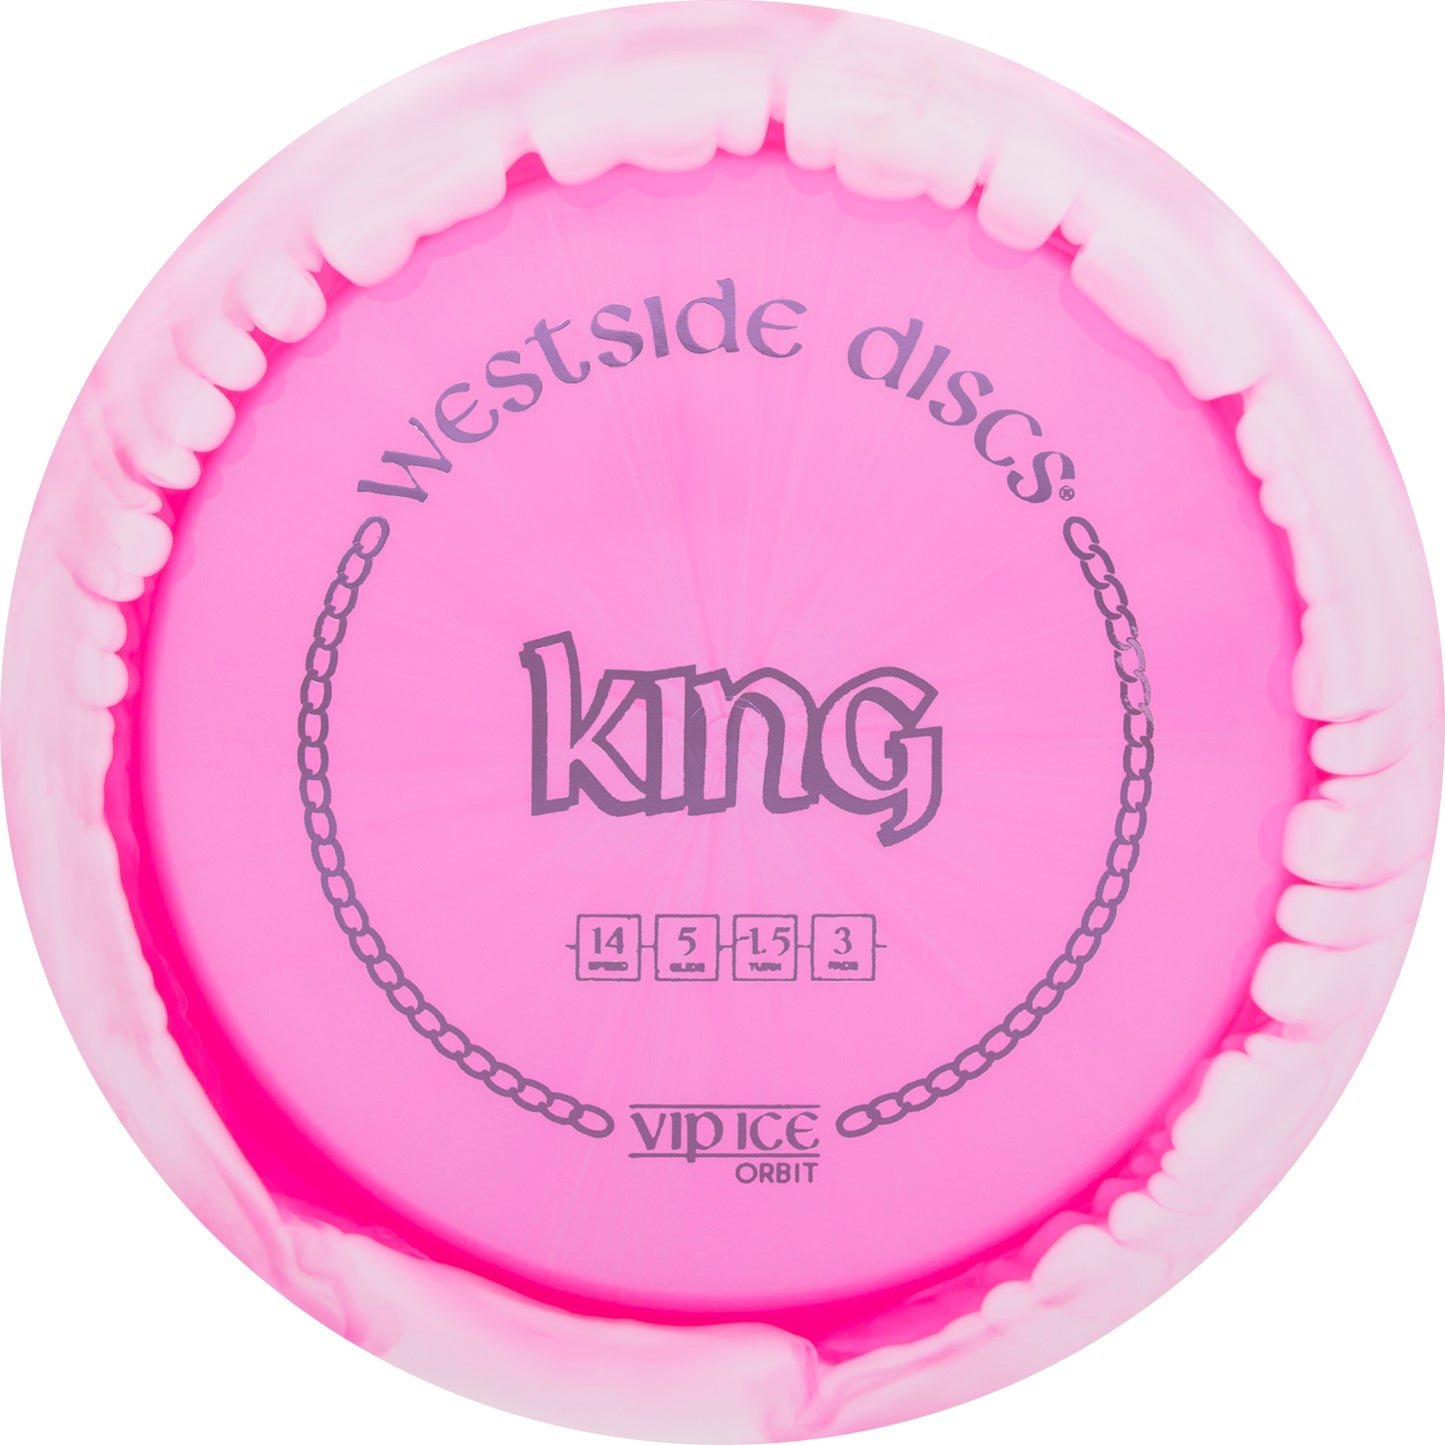 Westside Discs VIP-Ice Orbit King